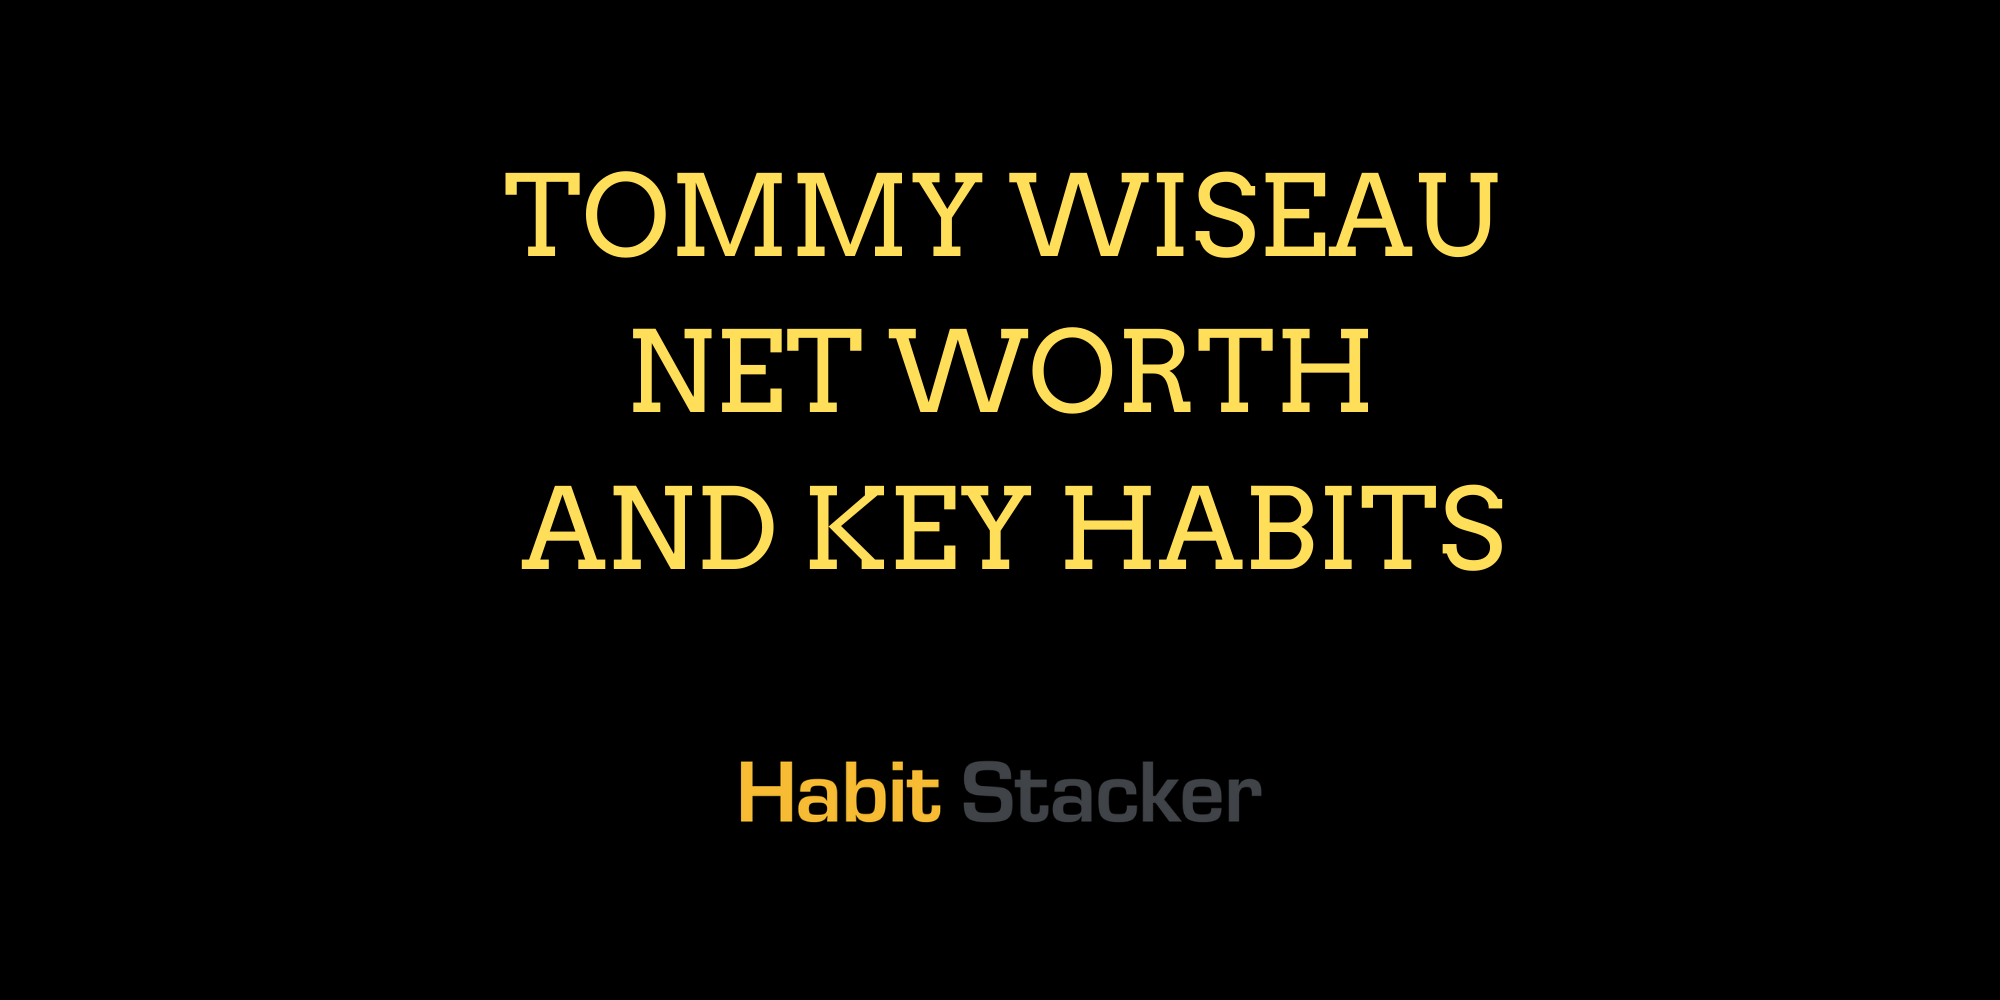 Tommy Wiseau Net Worth and Key Habits